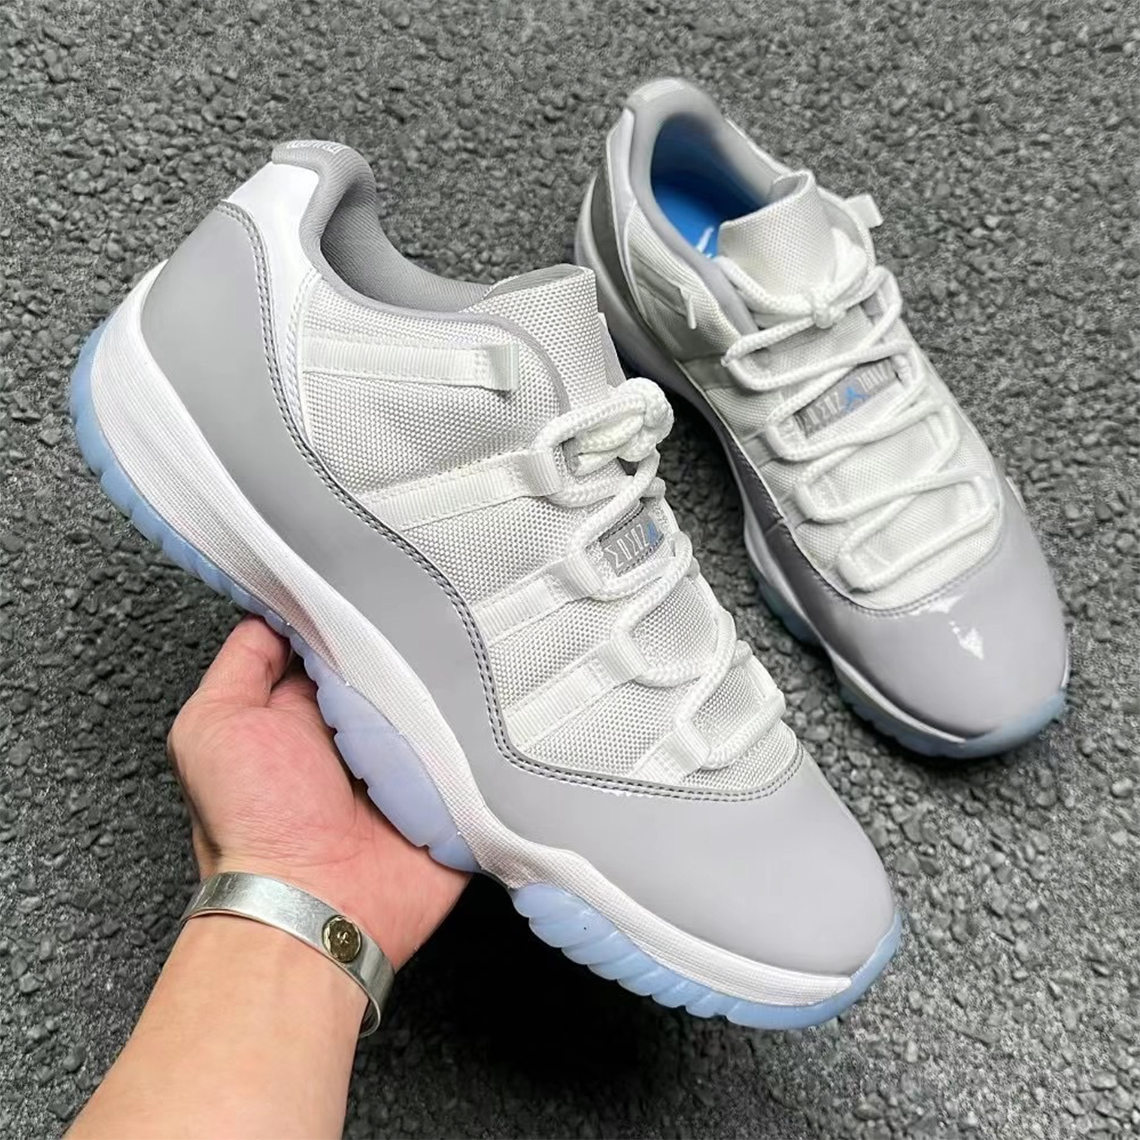 grey and white jordan 11